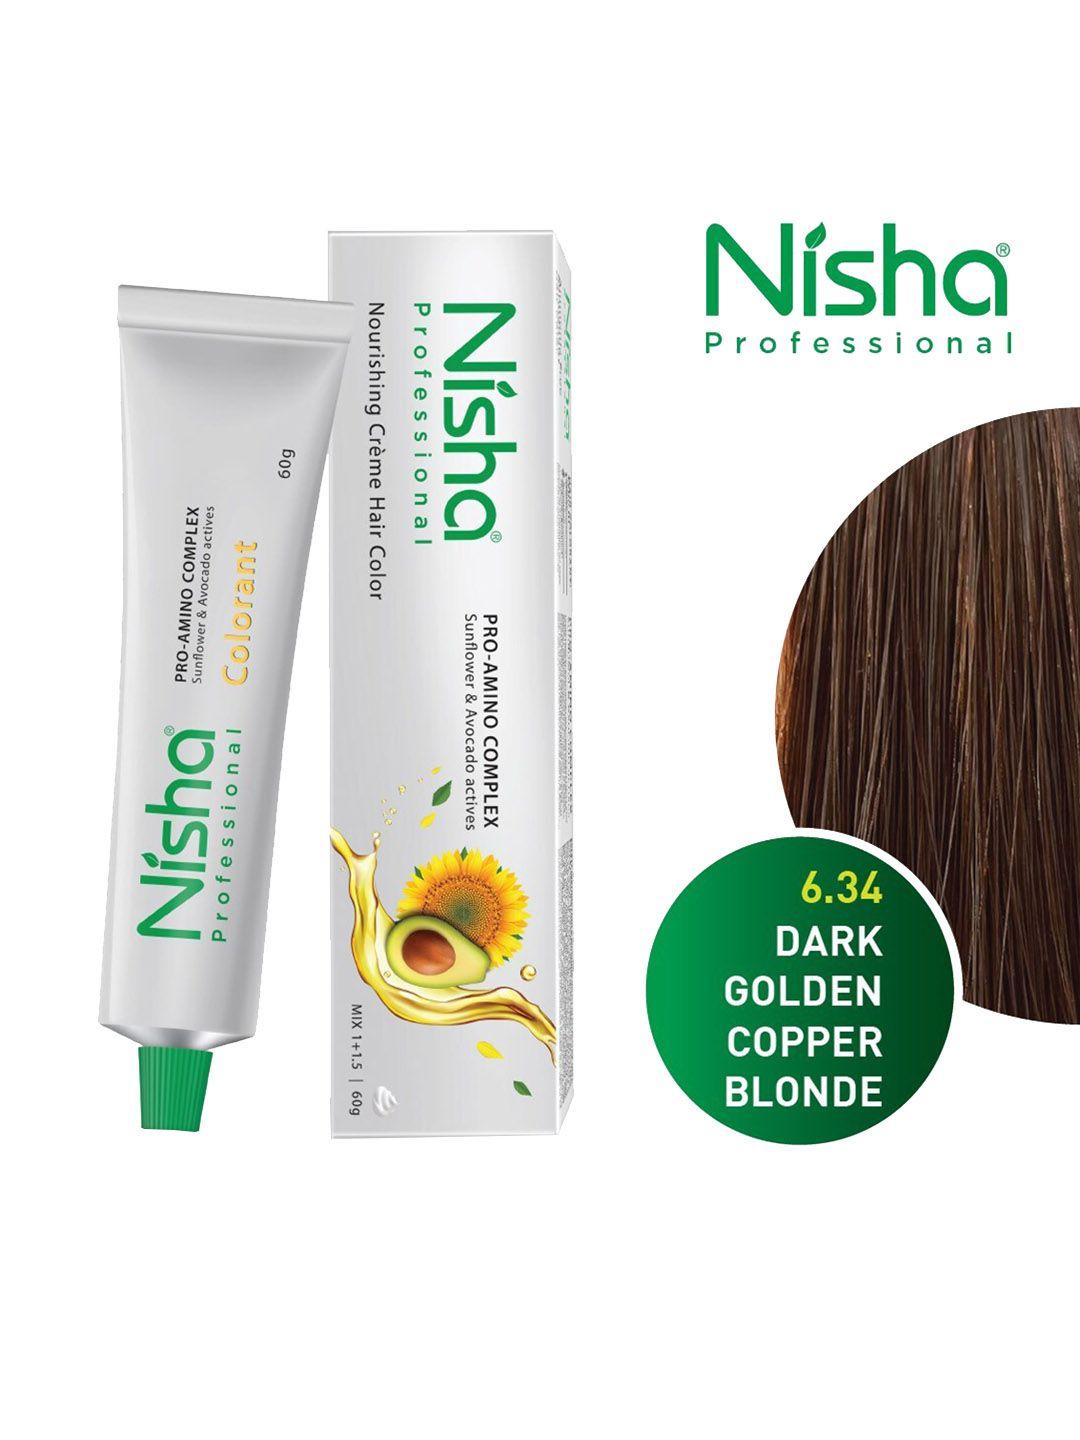 nisha pro creme hair color 60g dark golden copper blonde - 6.34